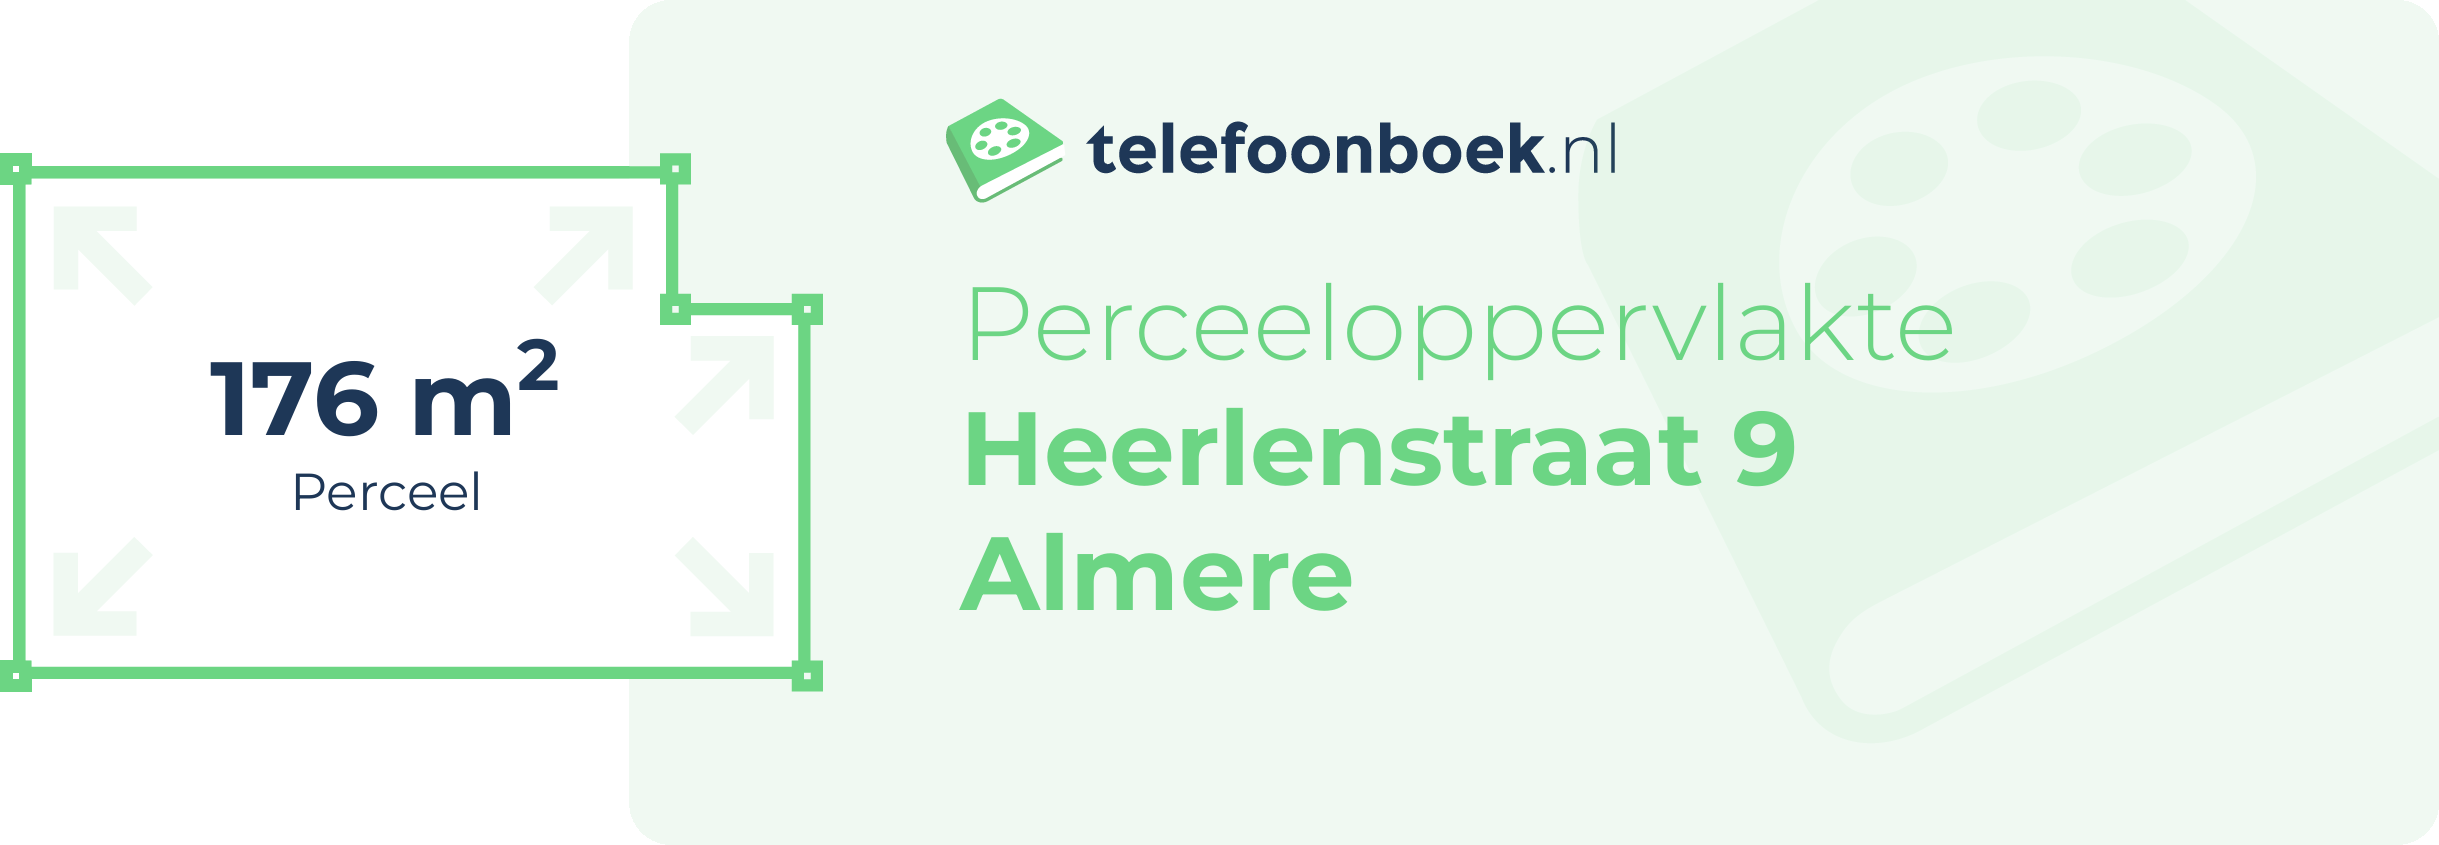 Perceeloppervlakte Heerlenstraat 9 Almere